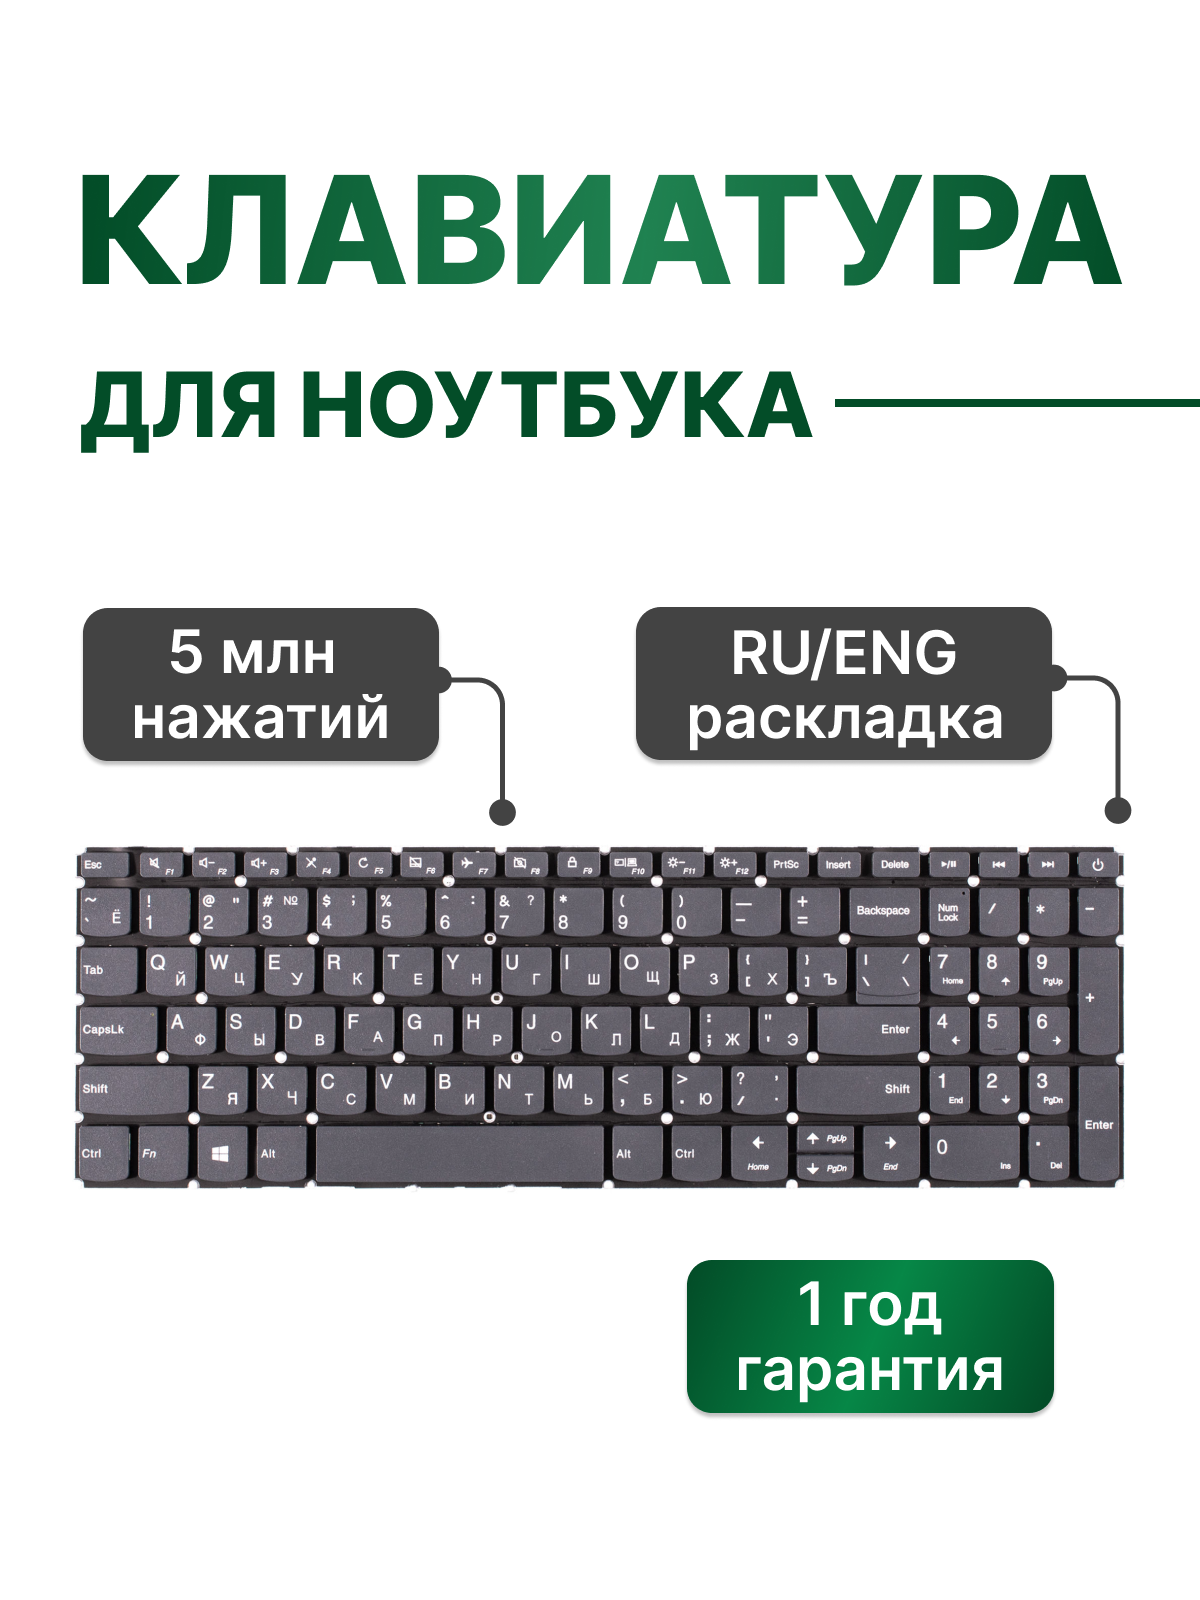 Клавиатура для Lenovo IdeaPad 330-15IKB 320-15IKB S145-15IWL 320-15IAP 330-15AST 320-15ISK 330-15ARR и др